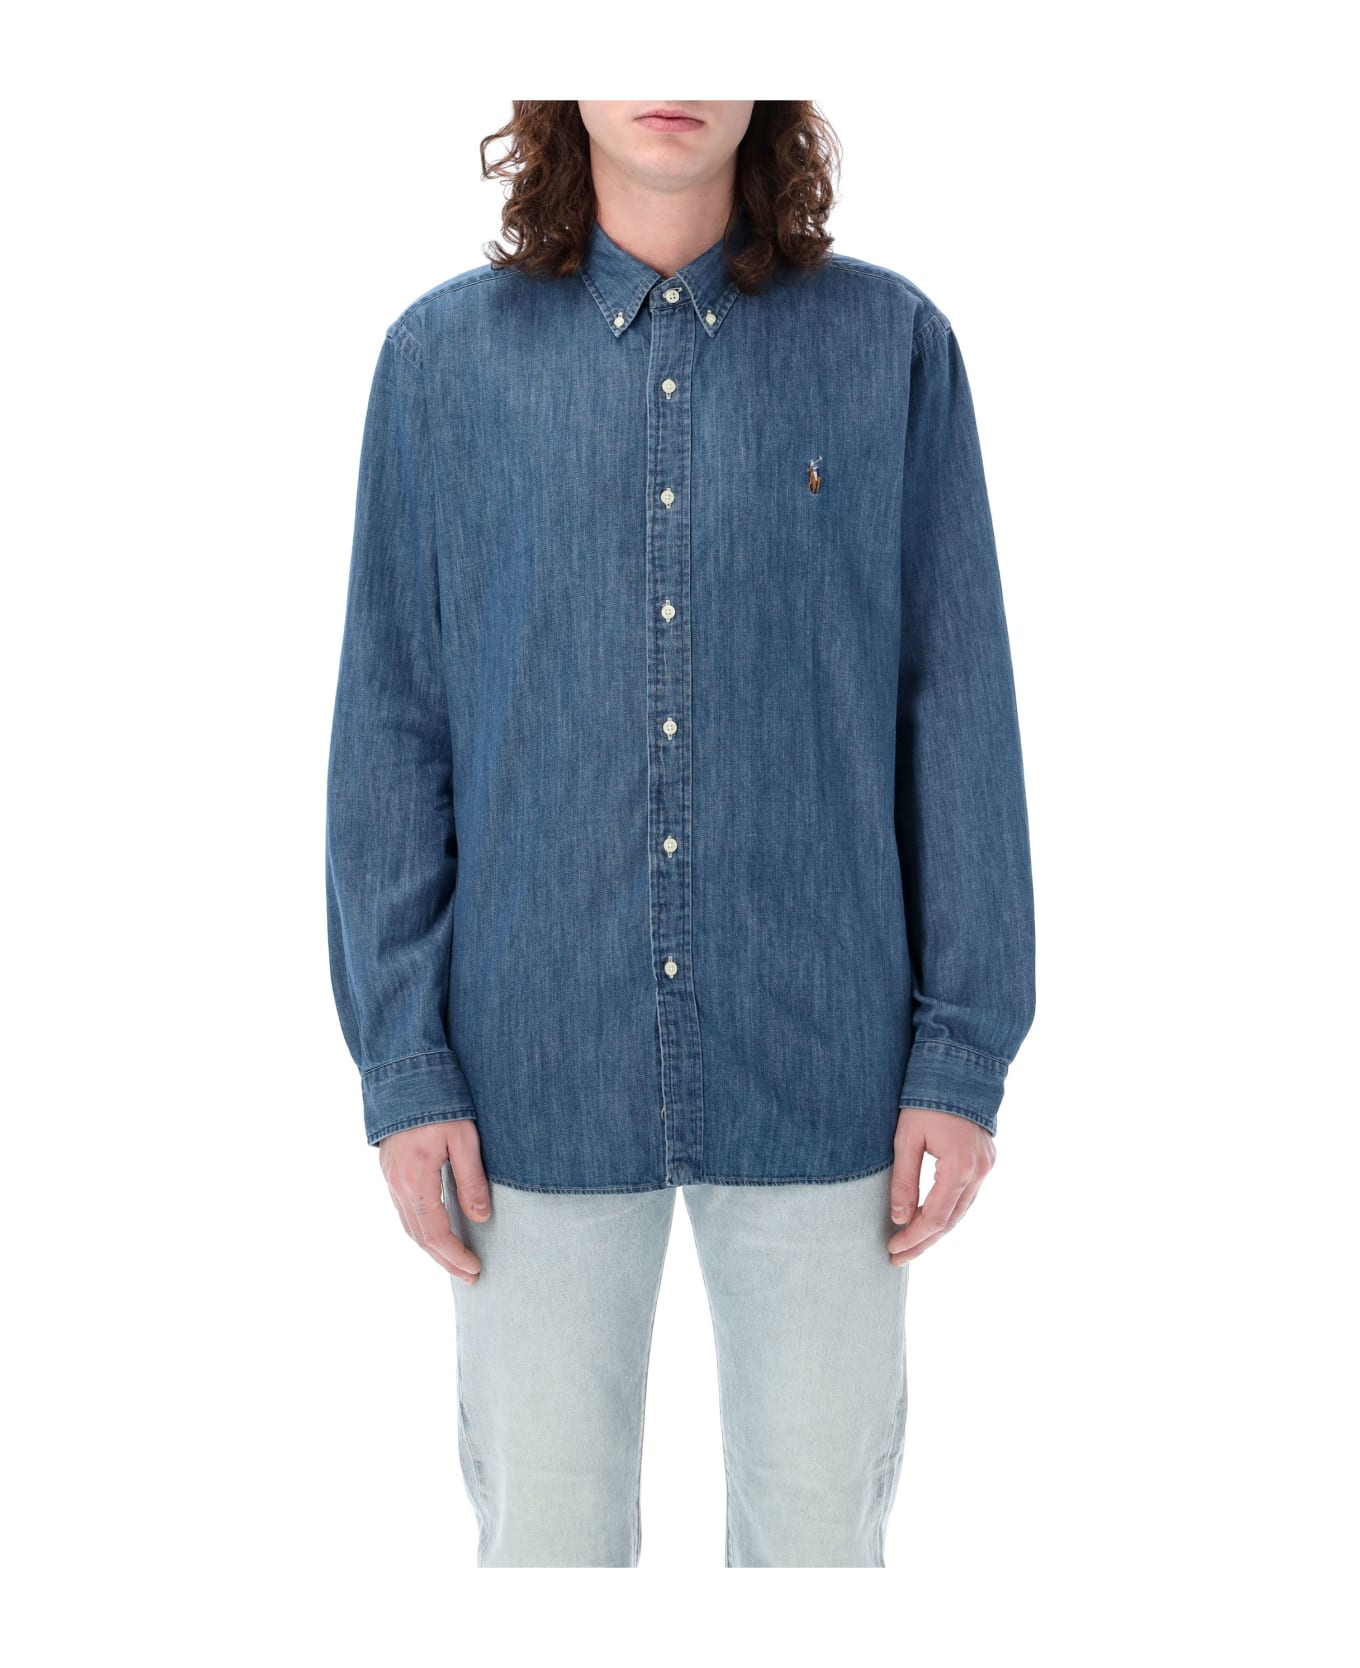 Polo Ralph Lauren Custom Fit Shirt - DENIM シャツ